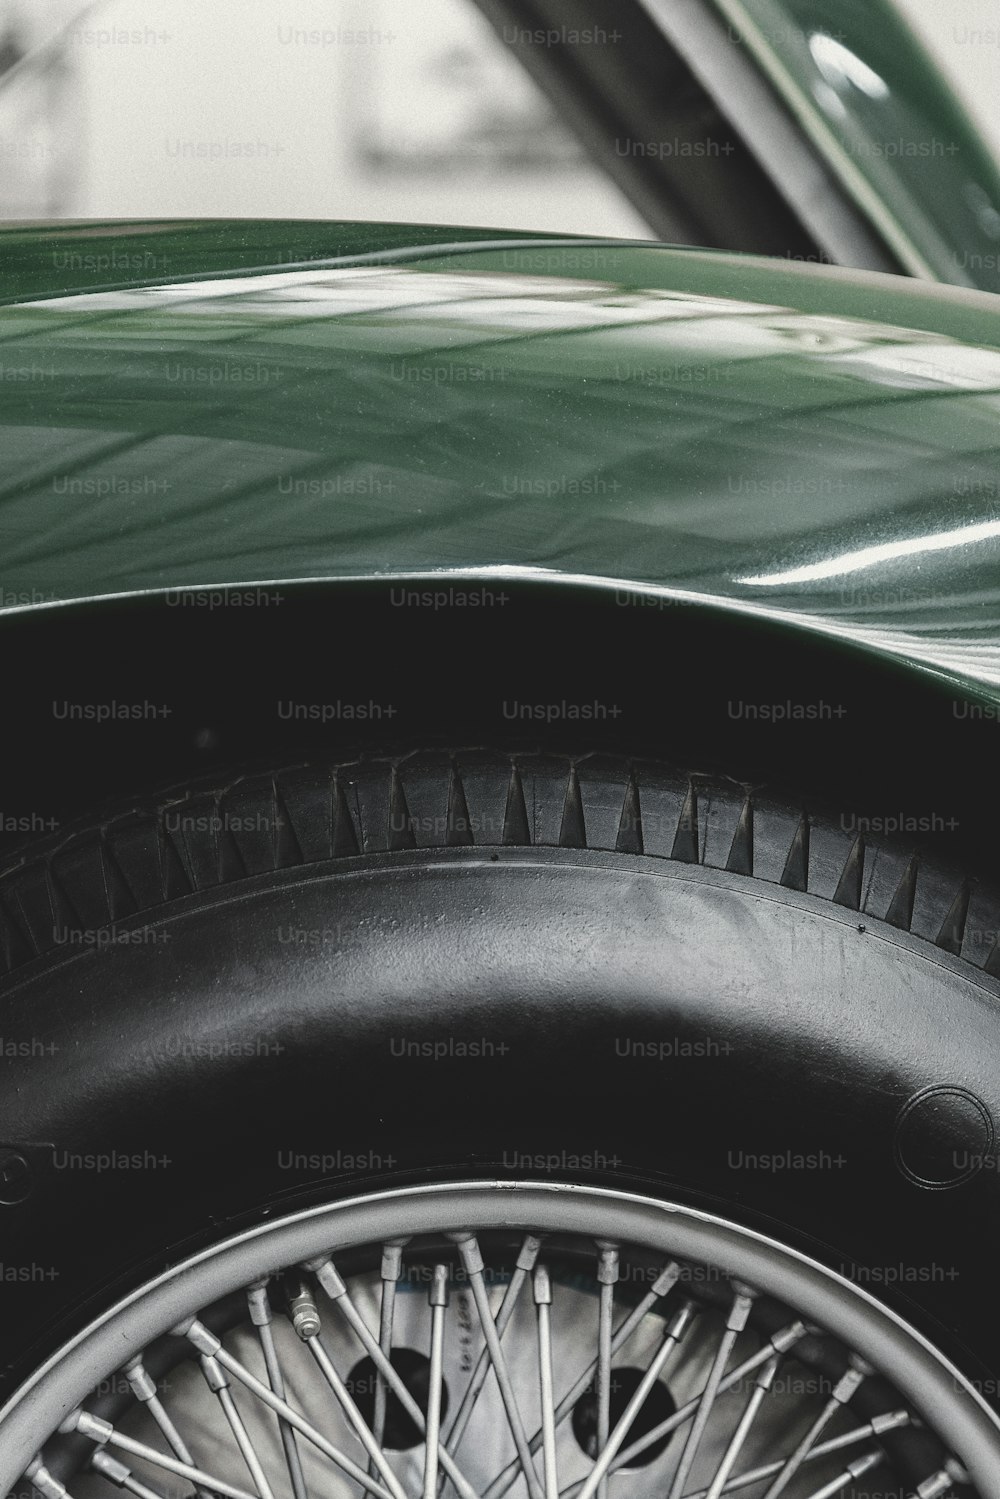 Un primer plano de un neumático en un coche verde